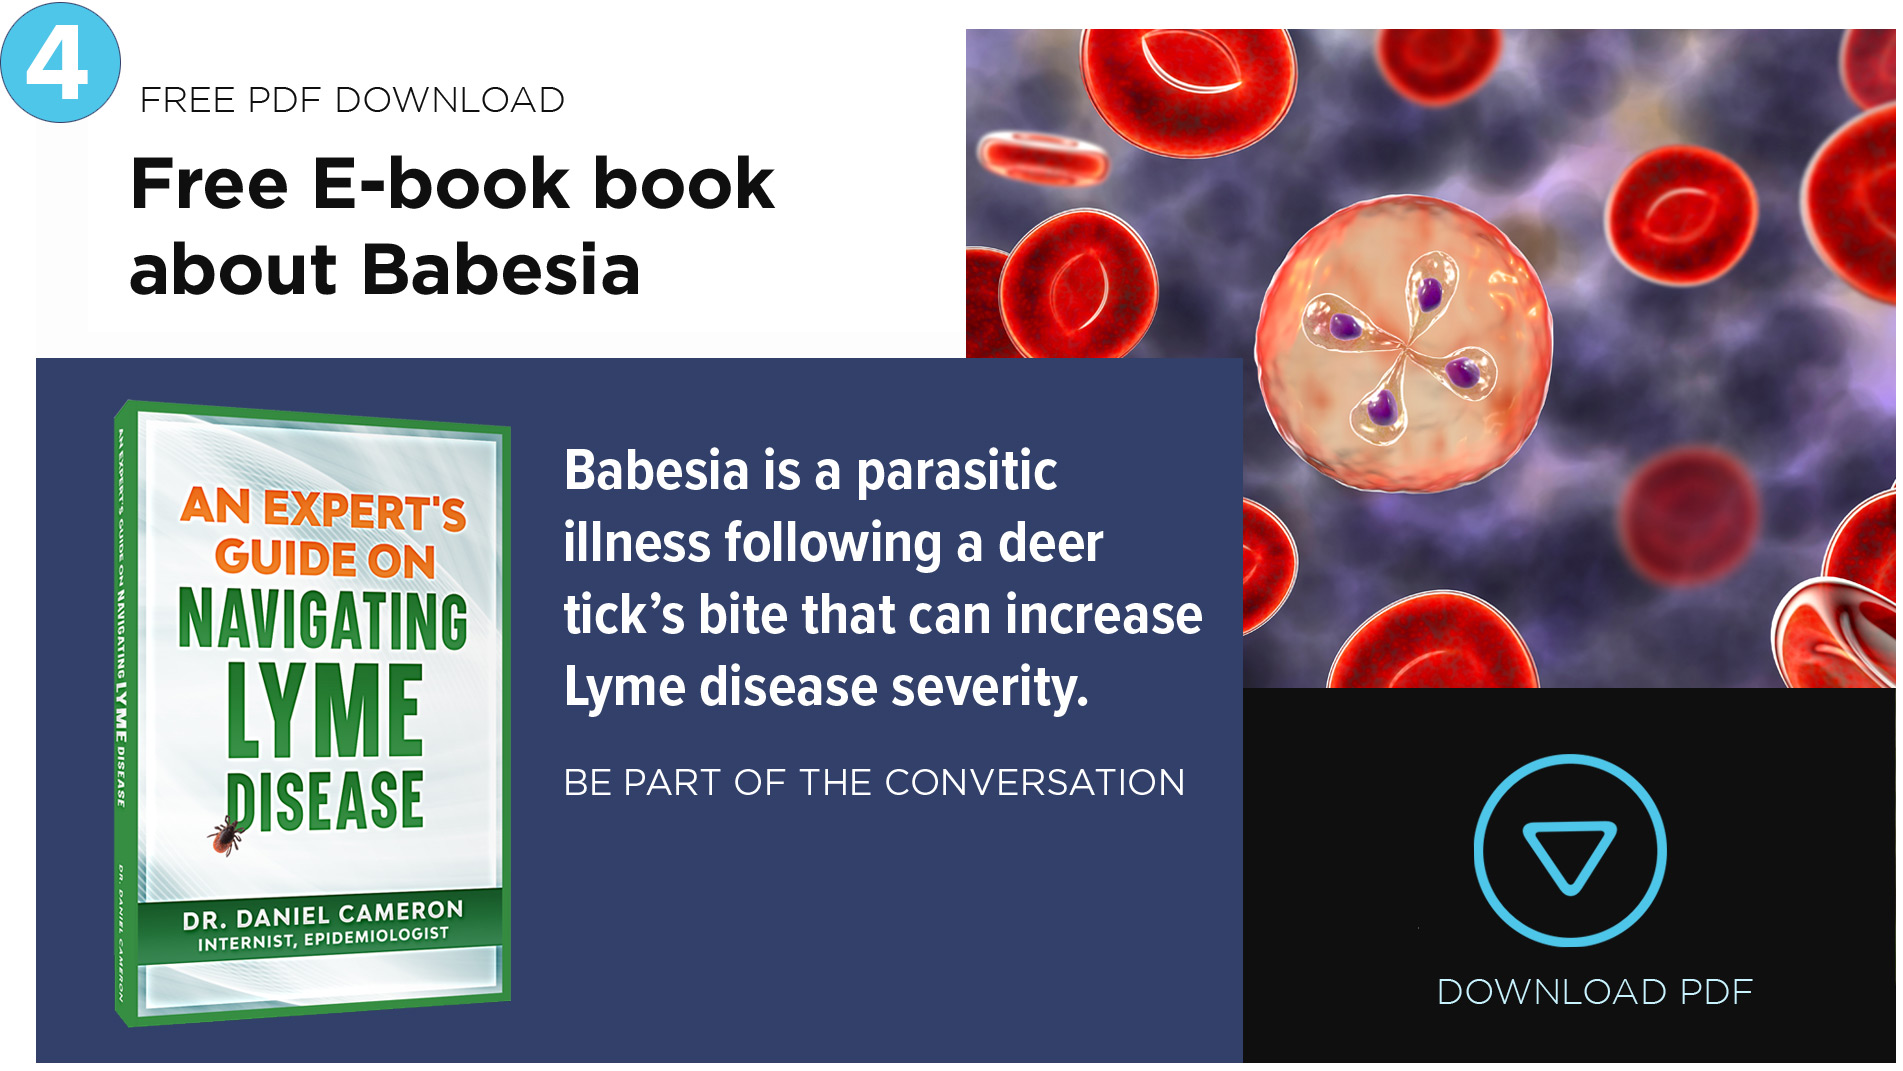 4 Intro to Lyme Disease Videos